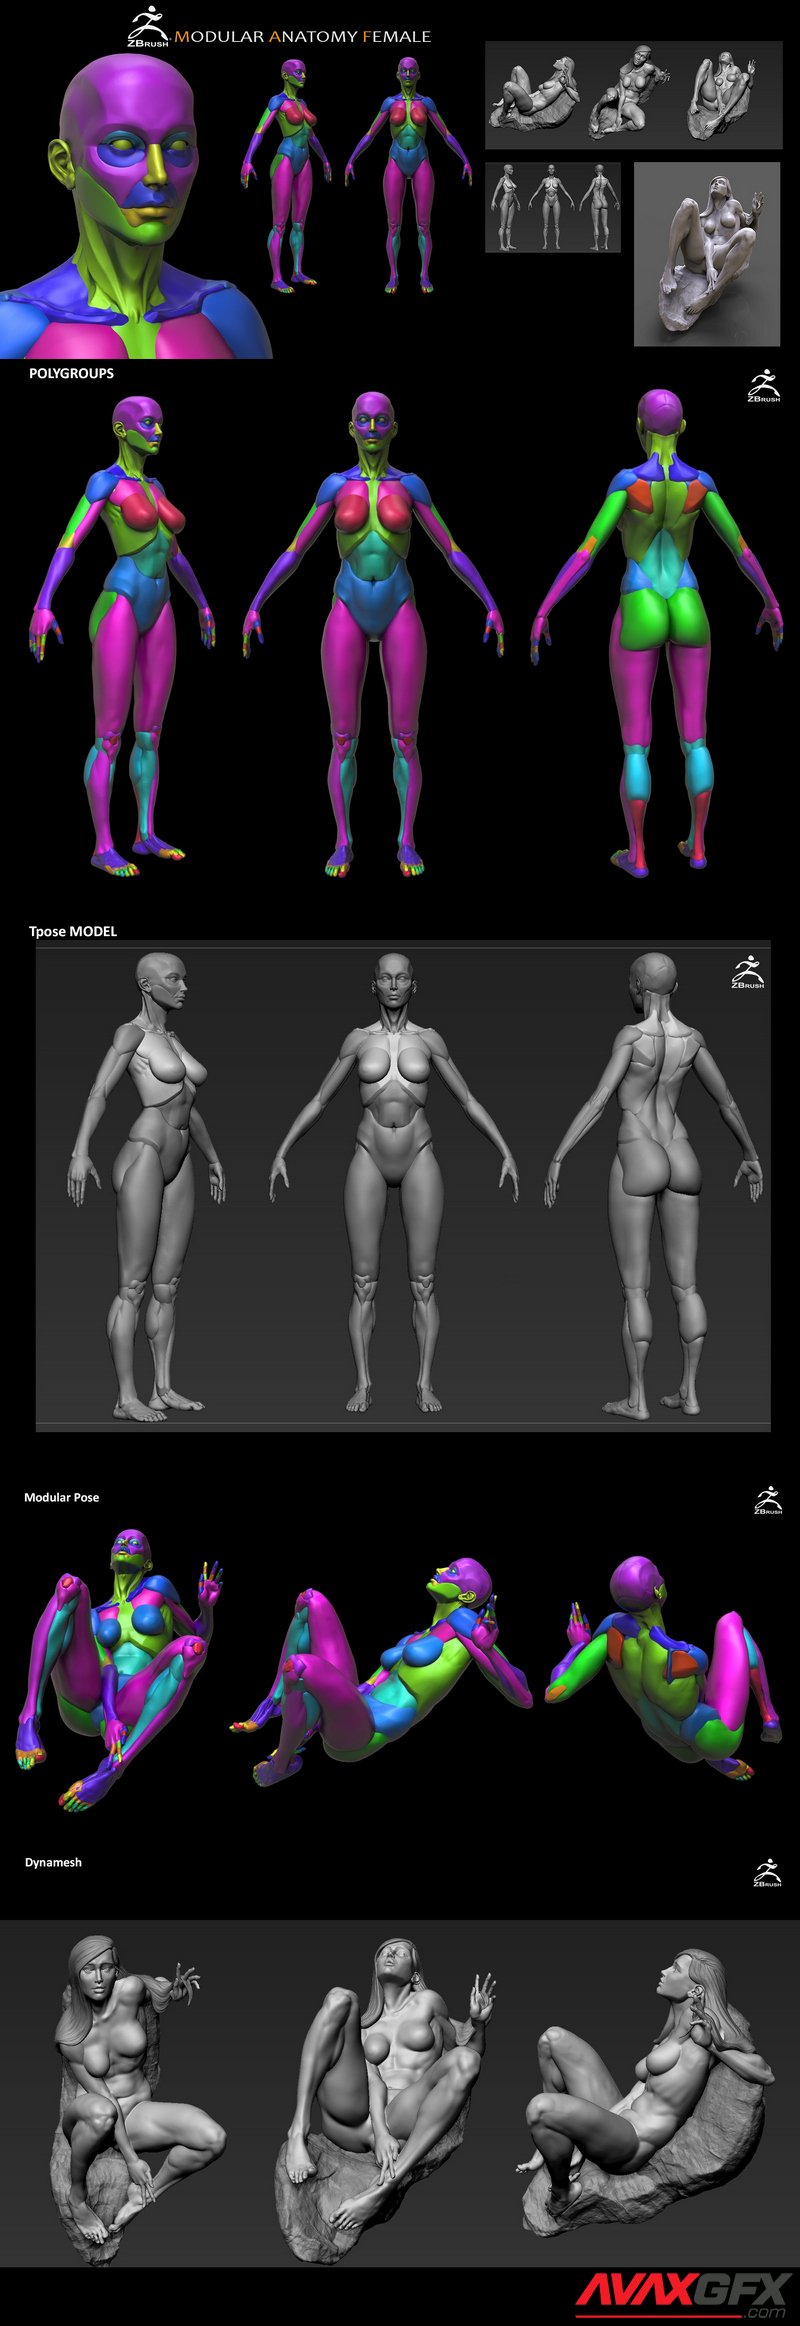 Female Modular Anatomy